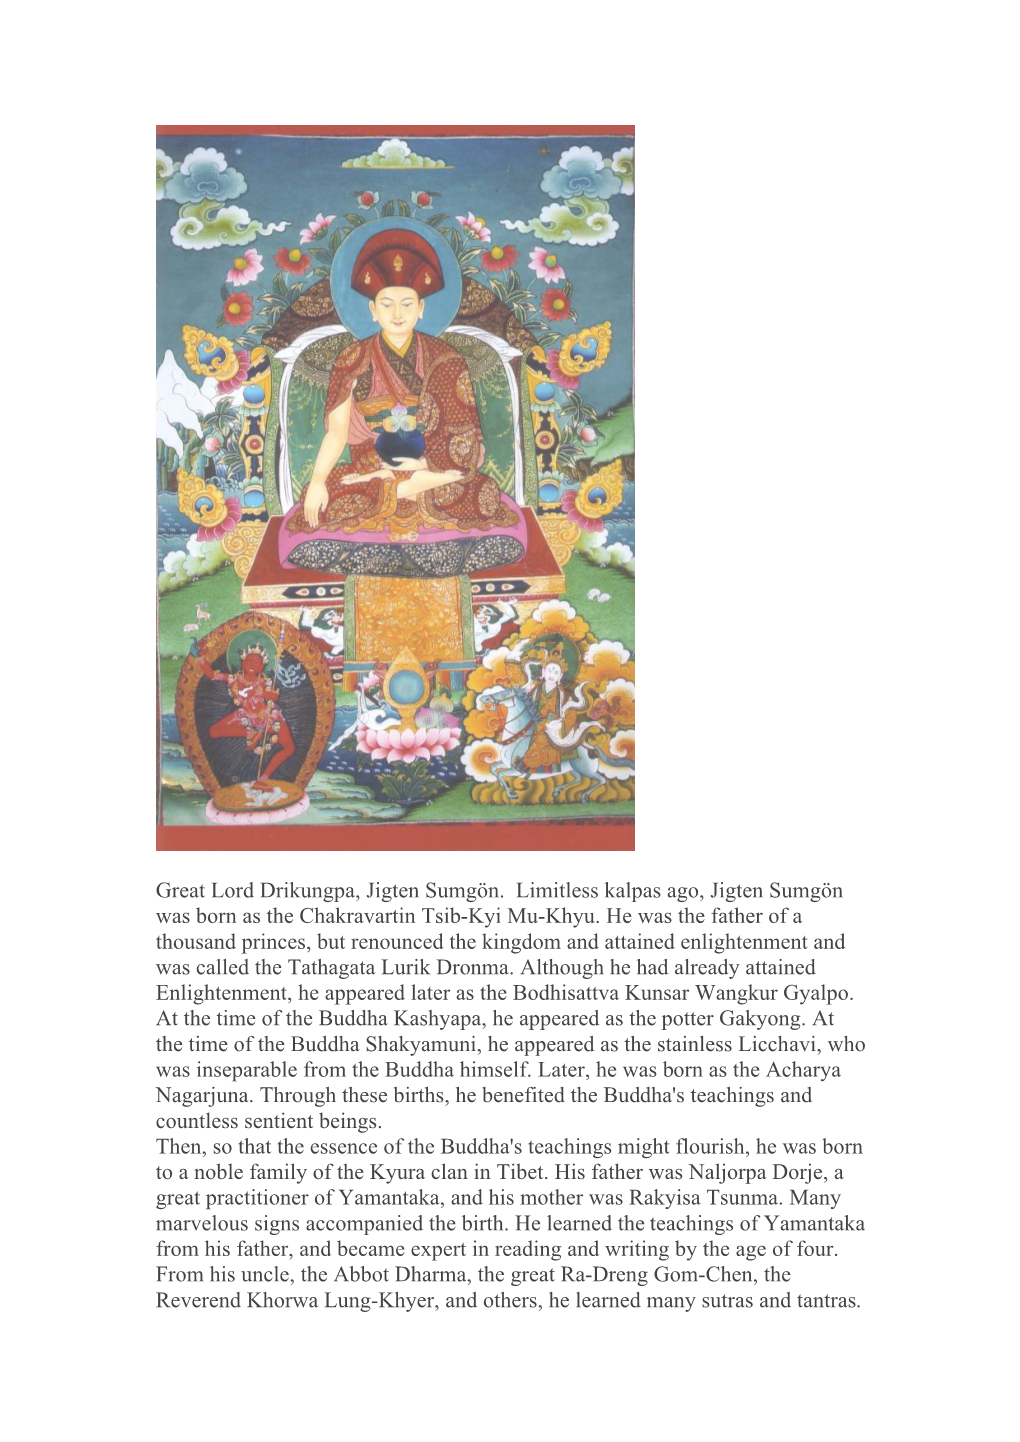 Great Lord Drikungpa, Jigten Sumgön. Limitless Kalpas Ago, Jigten Sumgön Was Born As the Chakravartin Tsib-Kyi Mu-Khyu